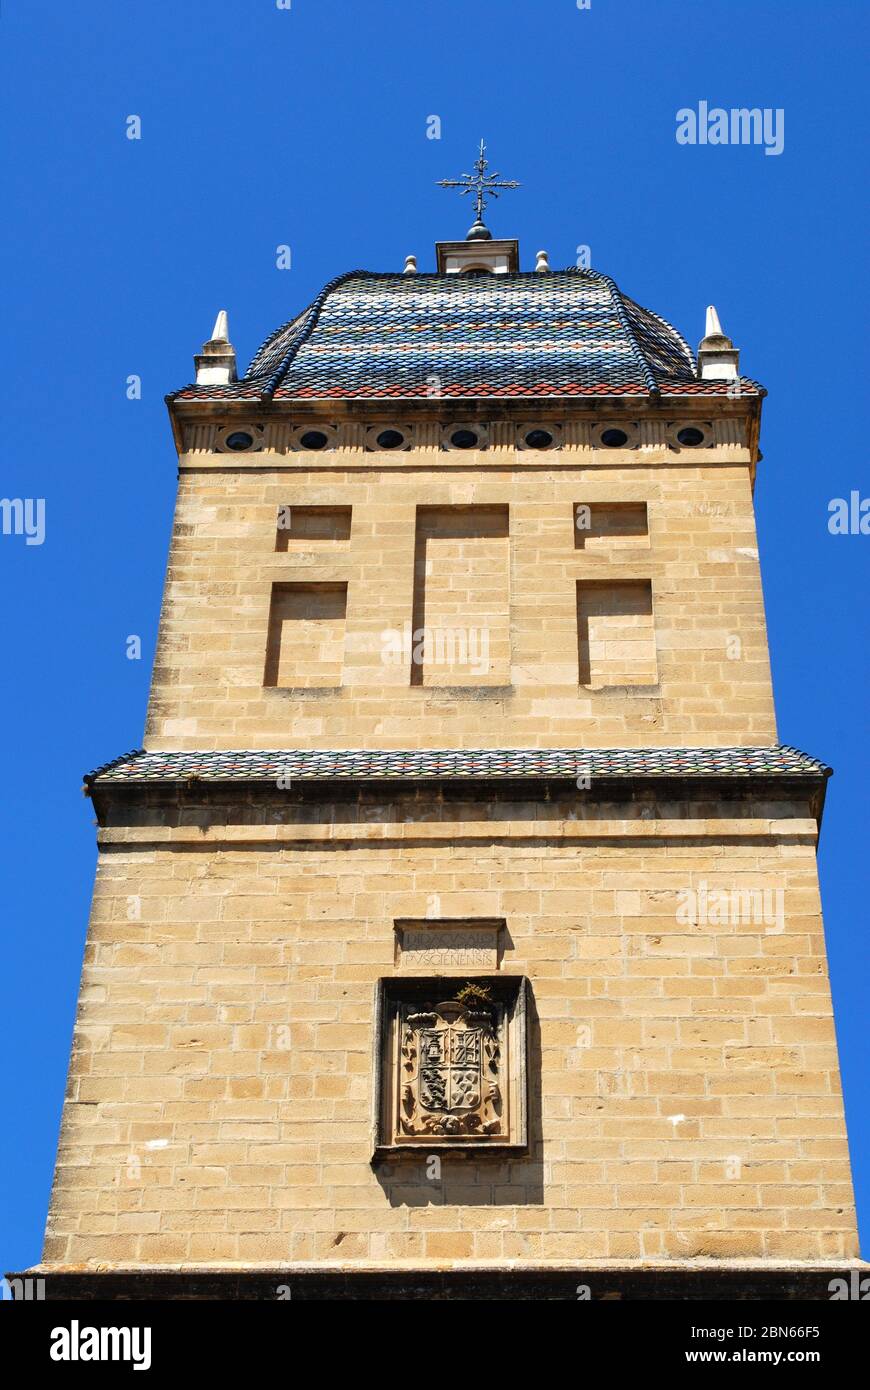 Santiago Hoispital (Hospital de Santiago) tower with ceramic tiled dome, Ubeda, Jaen Province, Andalusia, Spain, Western Europe. Stock Photo